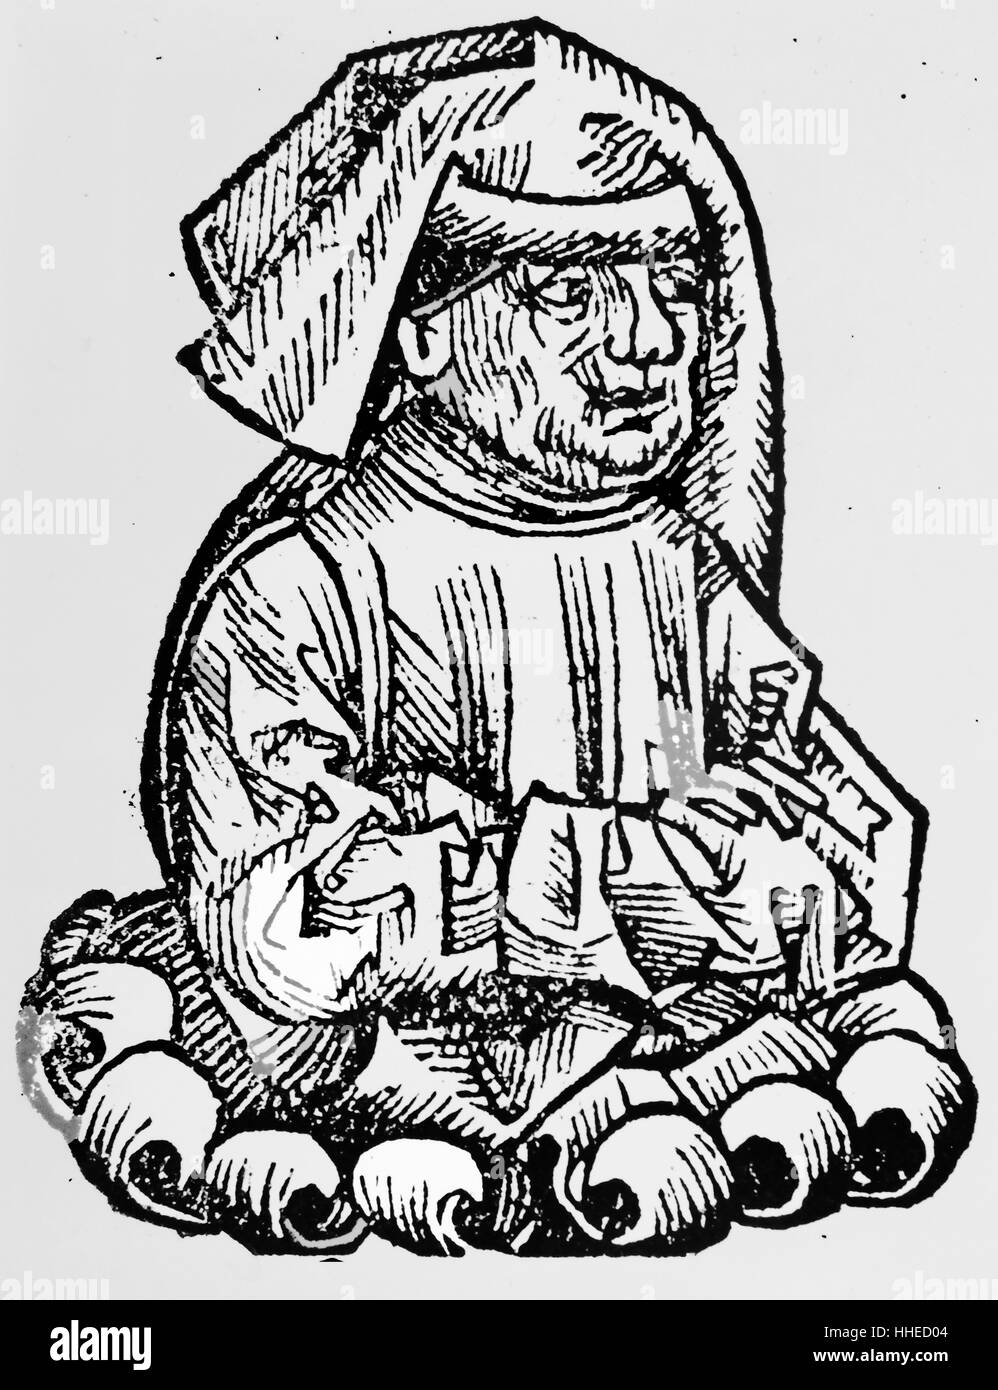 HERMES THE EGYPTIAN (Hermes Tris-megistus) the legendary founder bf occult and alchemical knowledge. from Hartmann Schaedel Liber chronicarum mundi(Nuremberg Chronicle), 1493. Stock Photo